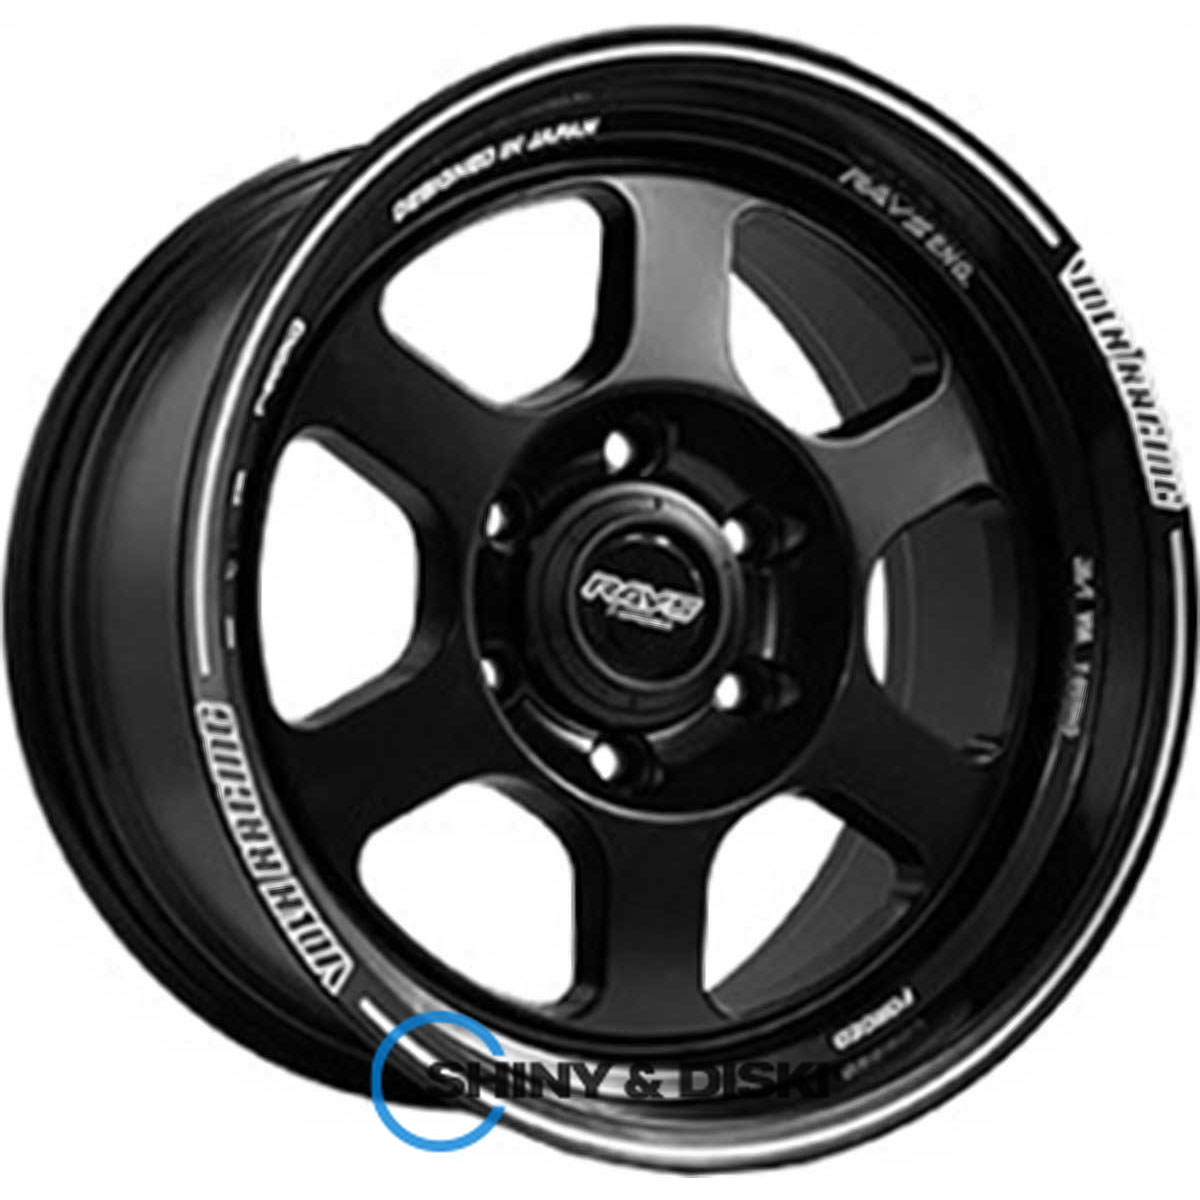 off road wheels ow6025 matt black with lip line r18 w9 pcd5x150 et0 dia110.1